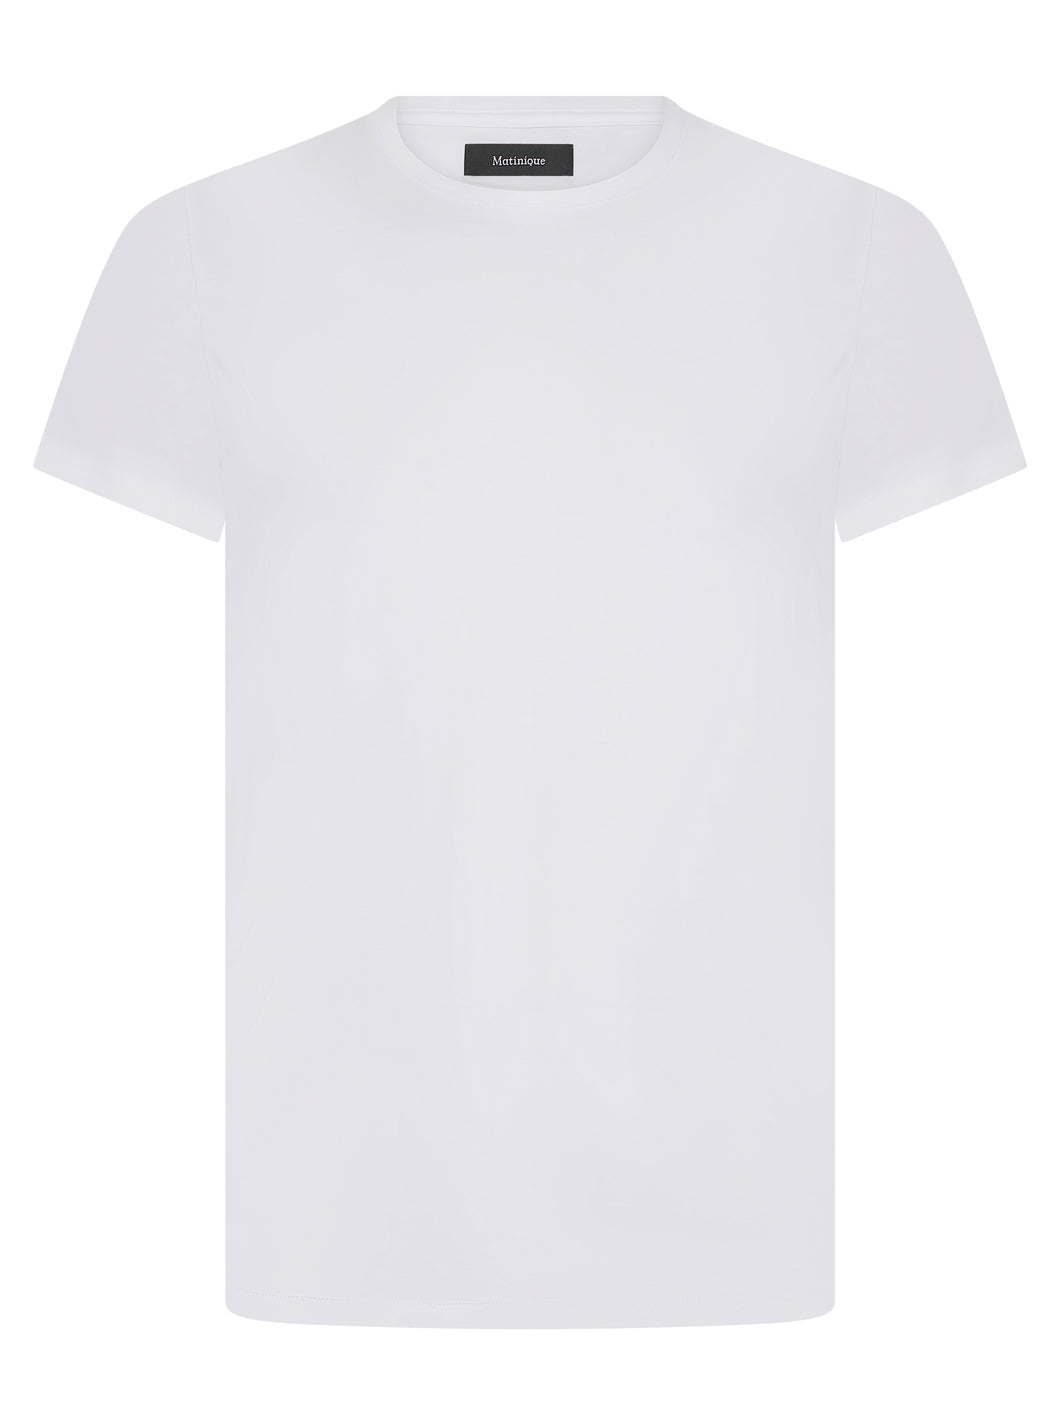 Jermalink T Shirt White